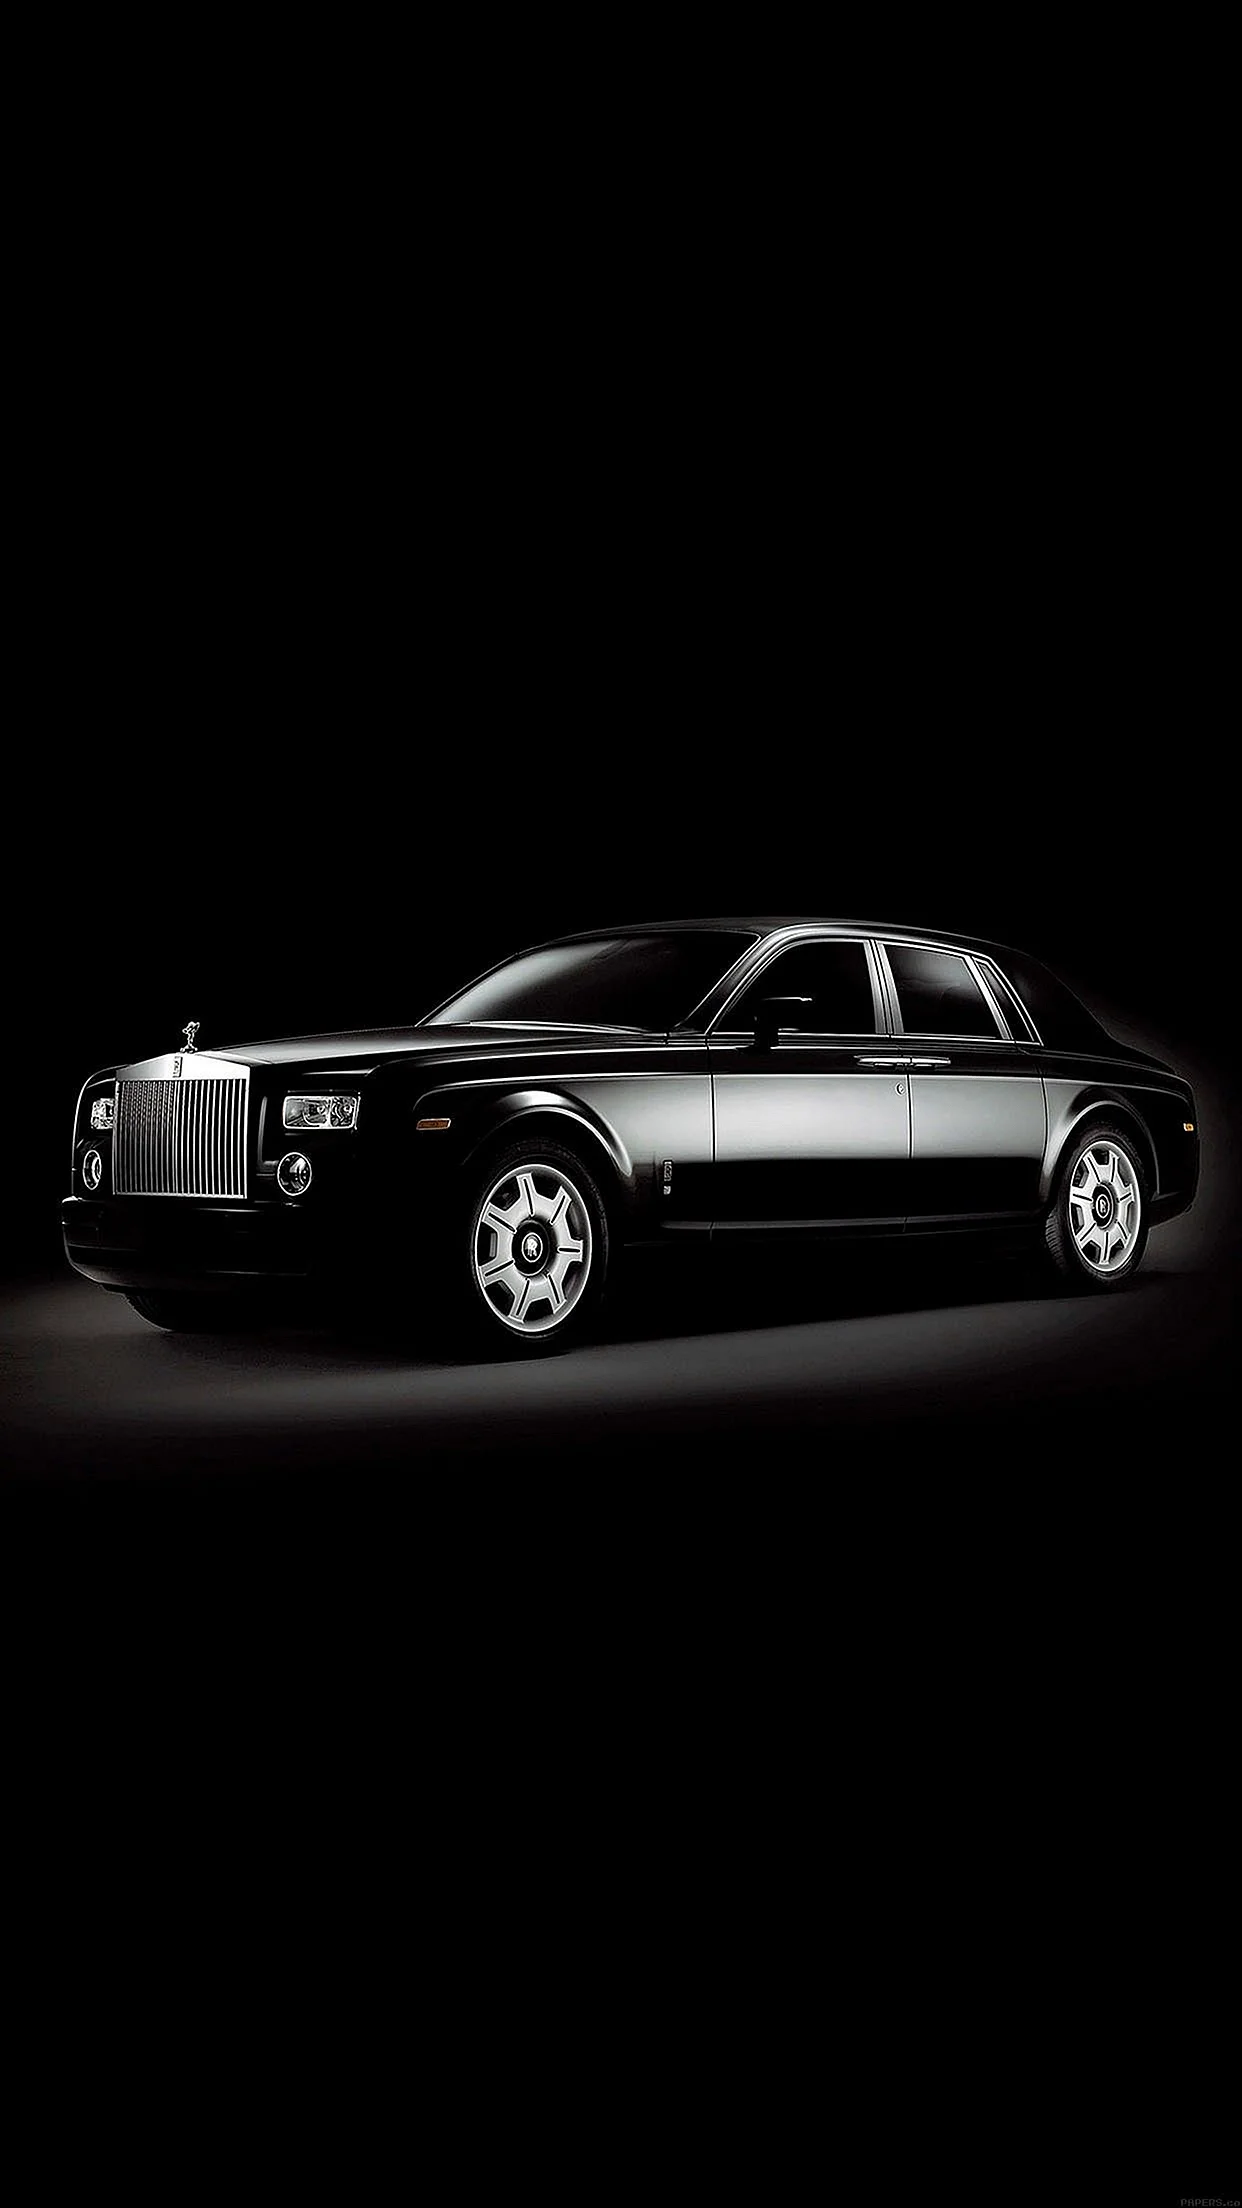 Rolls Royce Phantom Black Wallpaper For iPhone